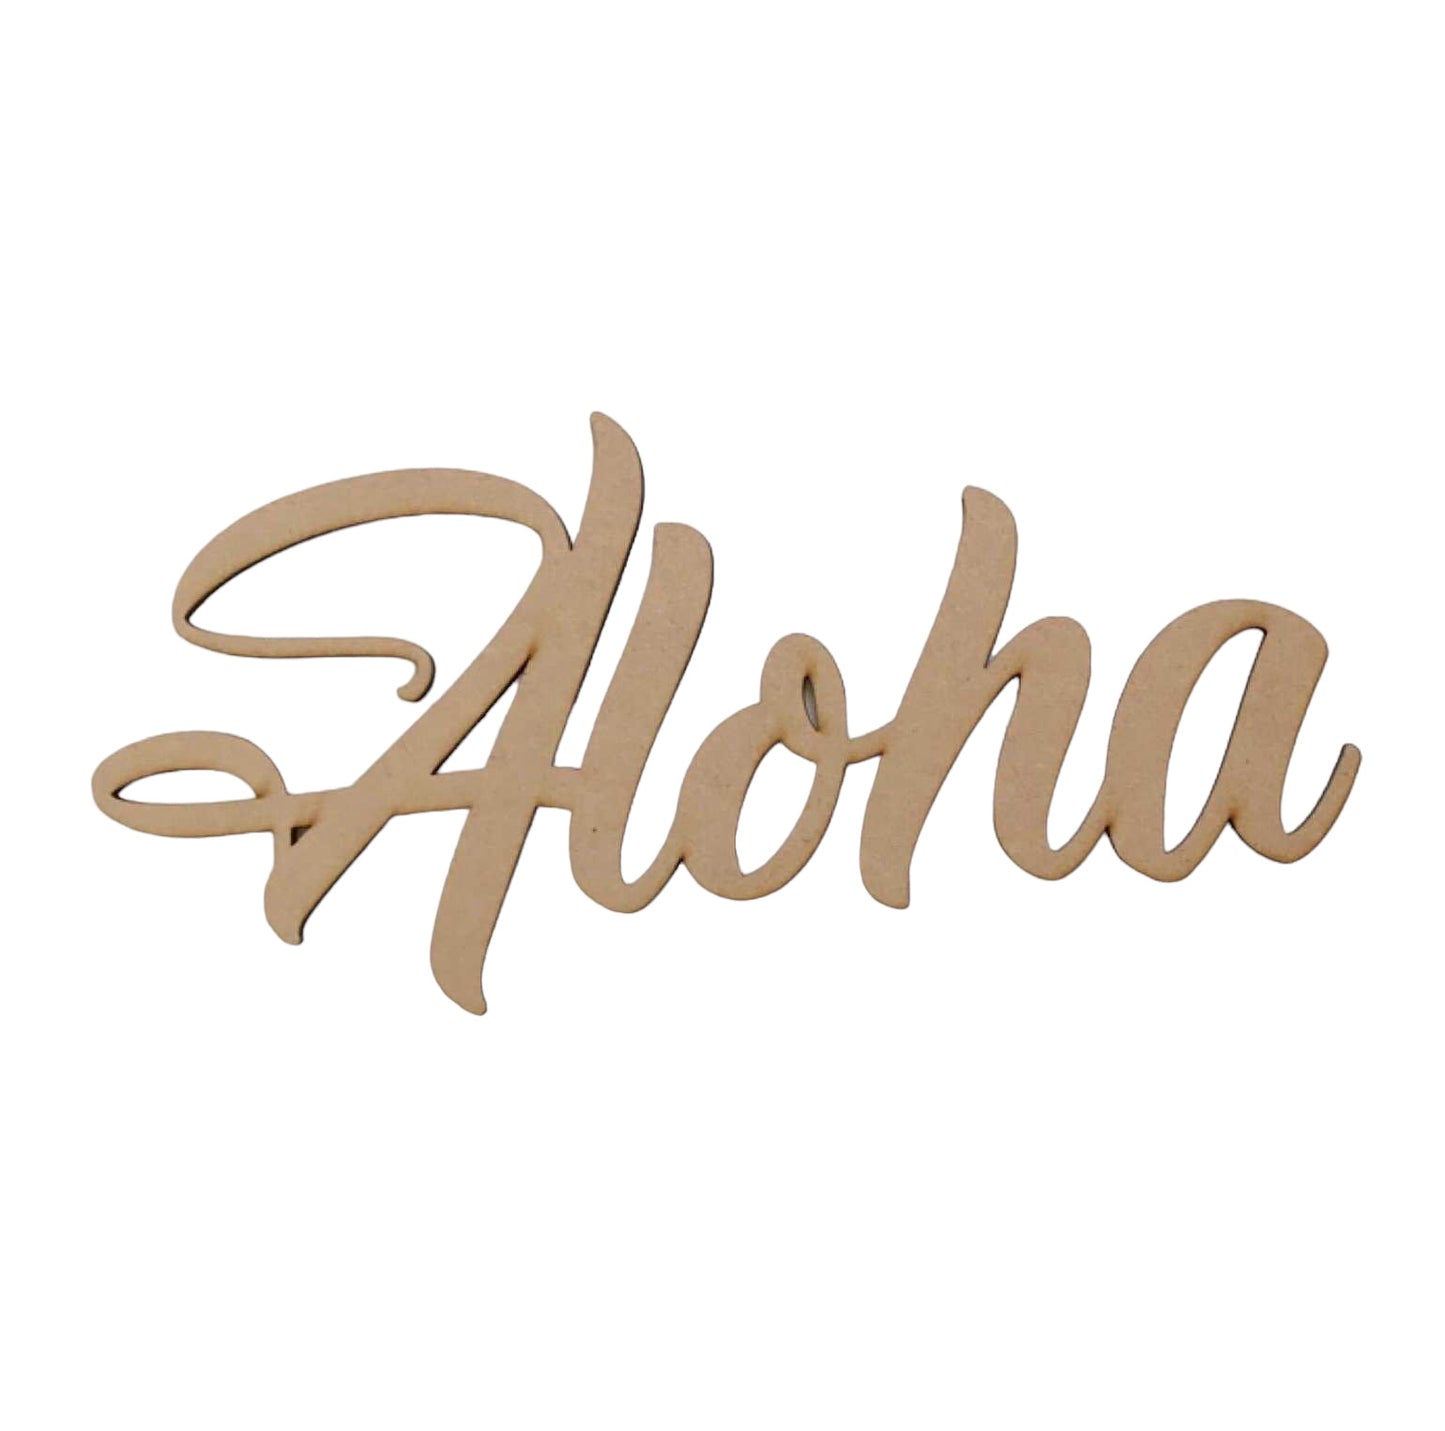 Aloha Hawaiian Greeting Word Wall Quote Art DIY Raw MDF Timber Wood - The Renmy Store Homewares & Gifts 